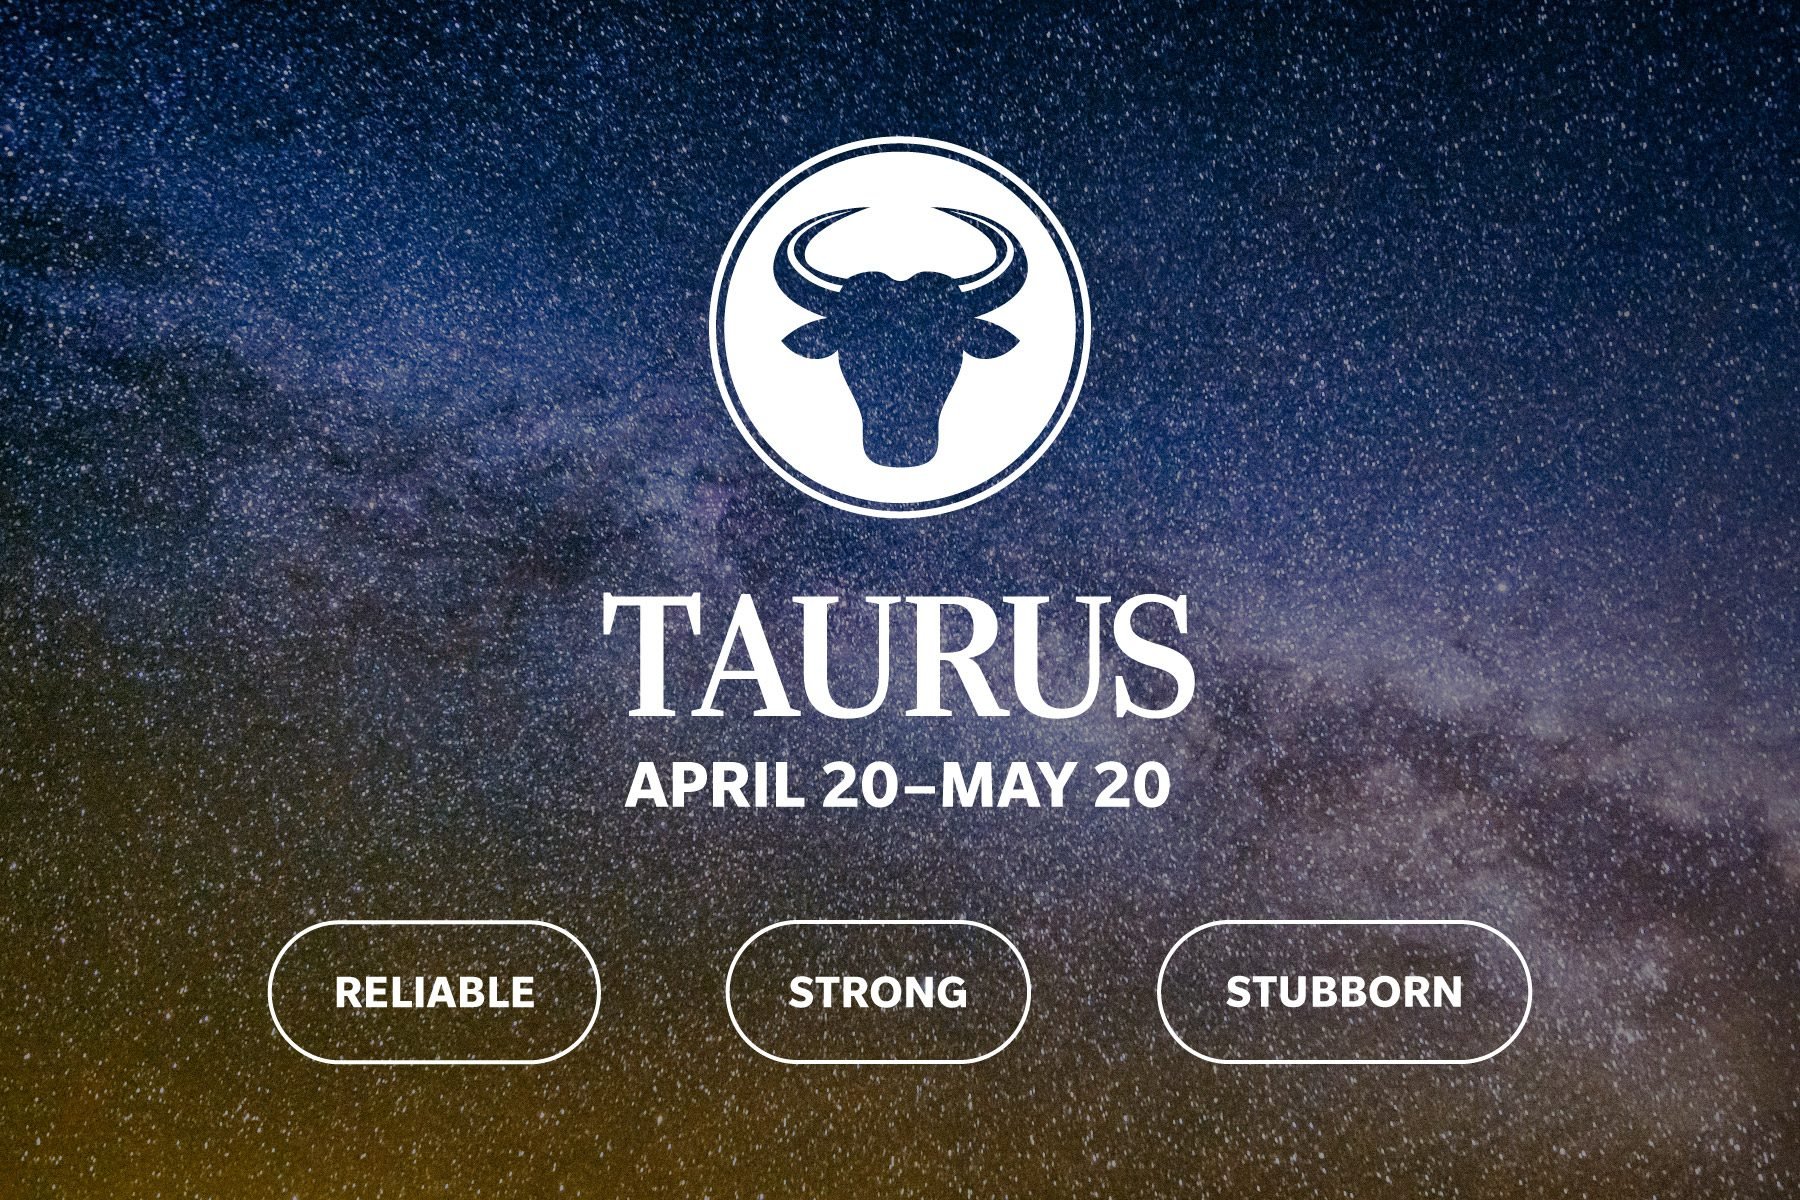 Zodiac sign qualities on galaxy background taurus